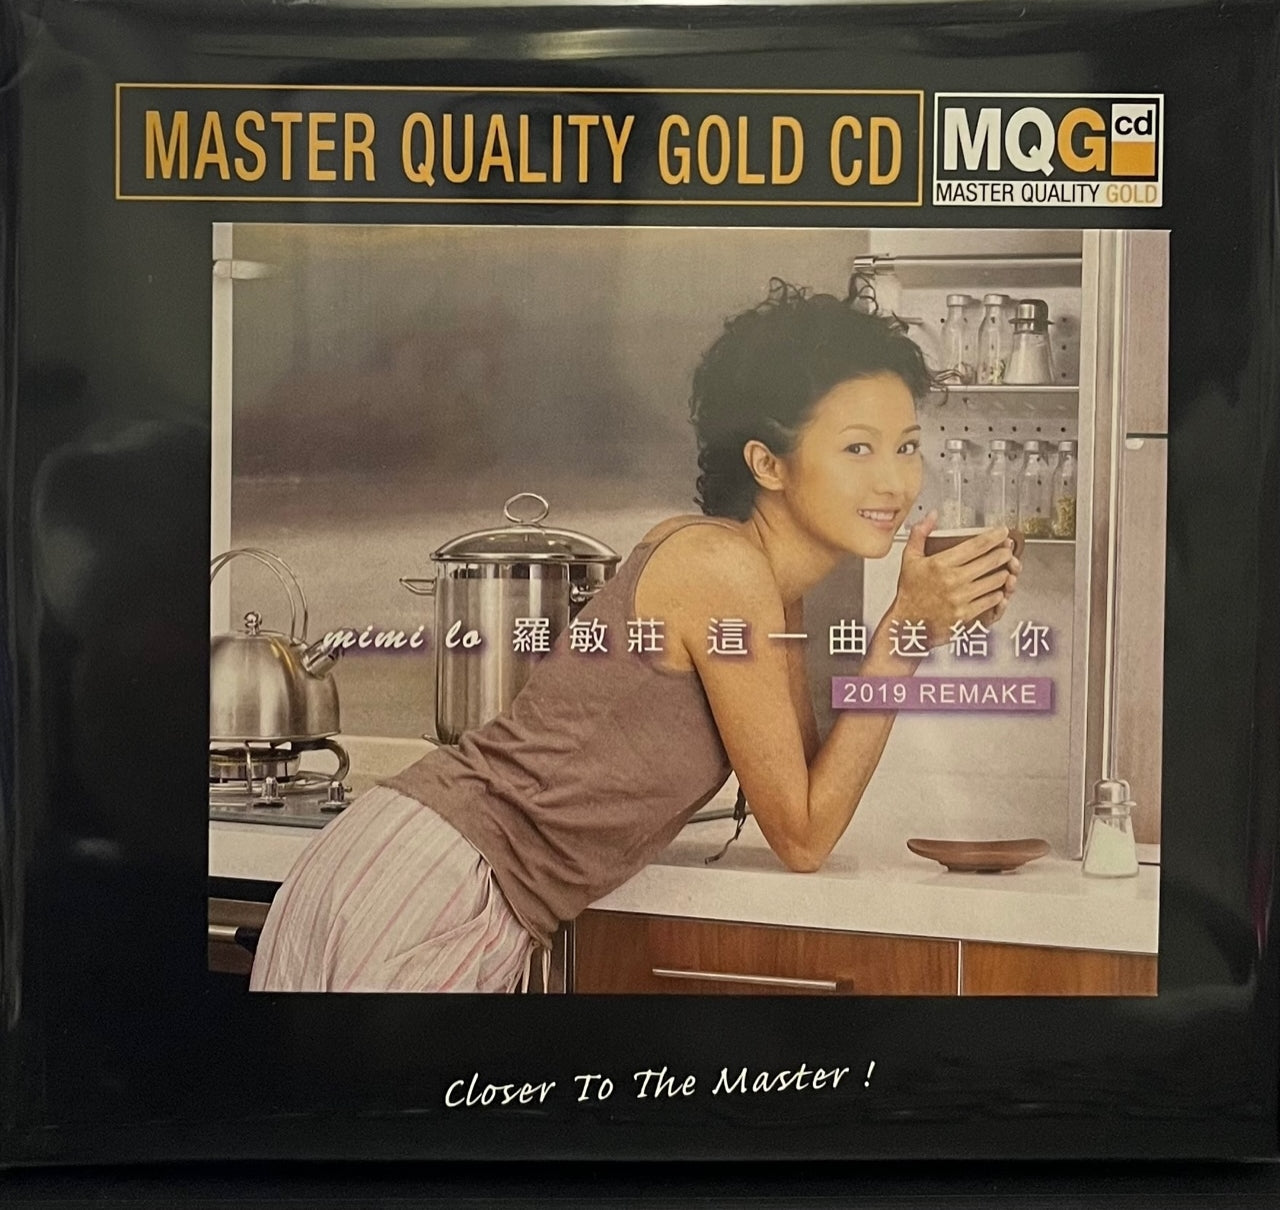 MIMI LO - 羅敏莊 這一曲送給你 2019 Remake master quality (MQGCD) CD